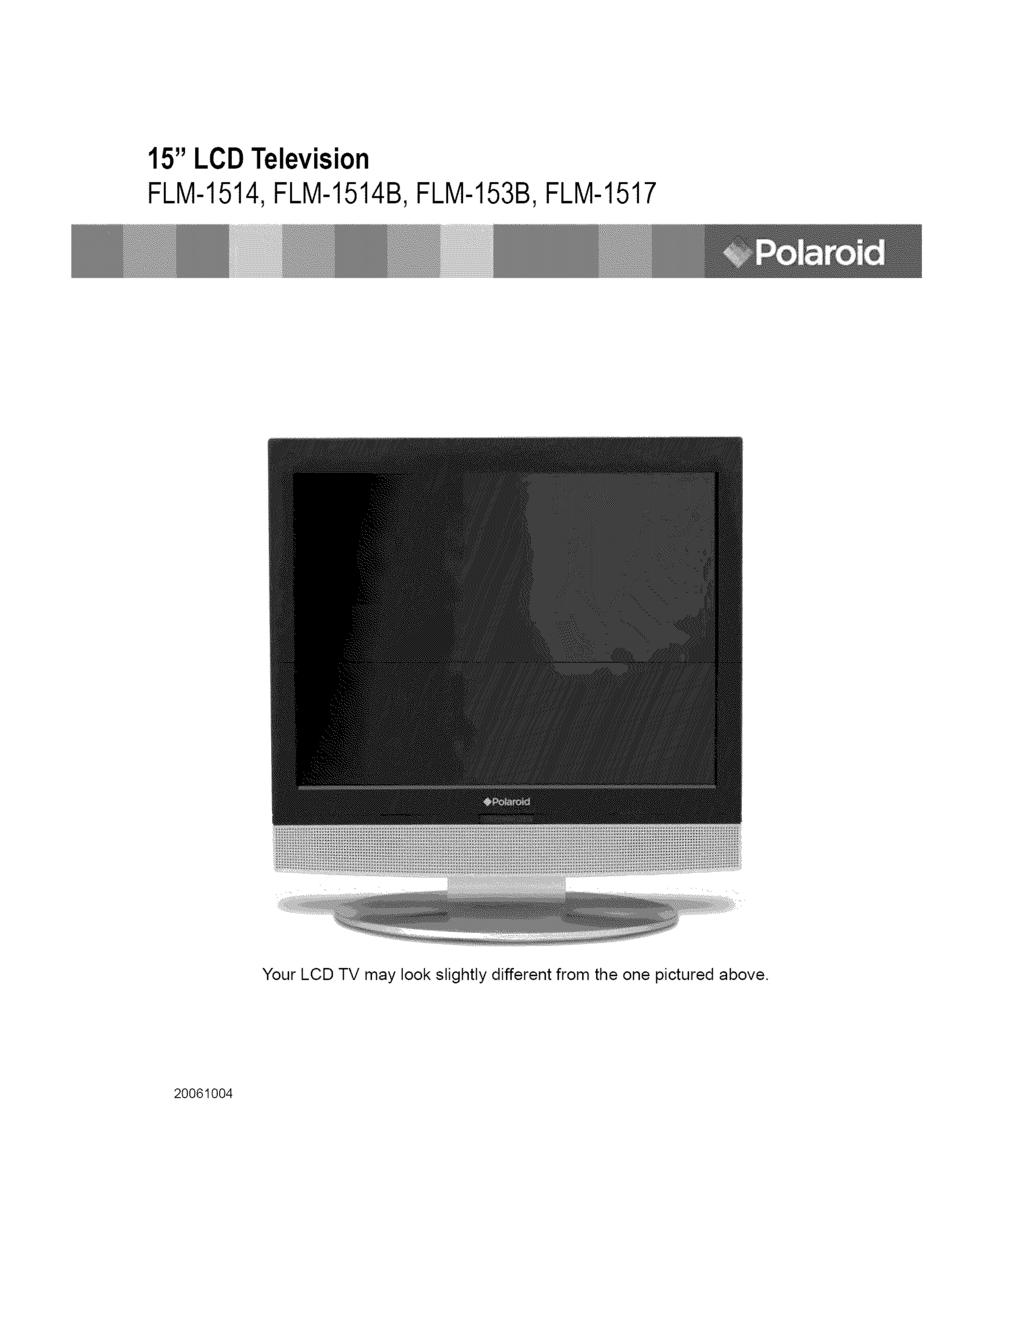 15" LCB Television FLM-1514,FLM-1514B,FLM-153B,FLM-1517 Your LCD